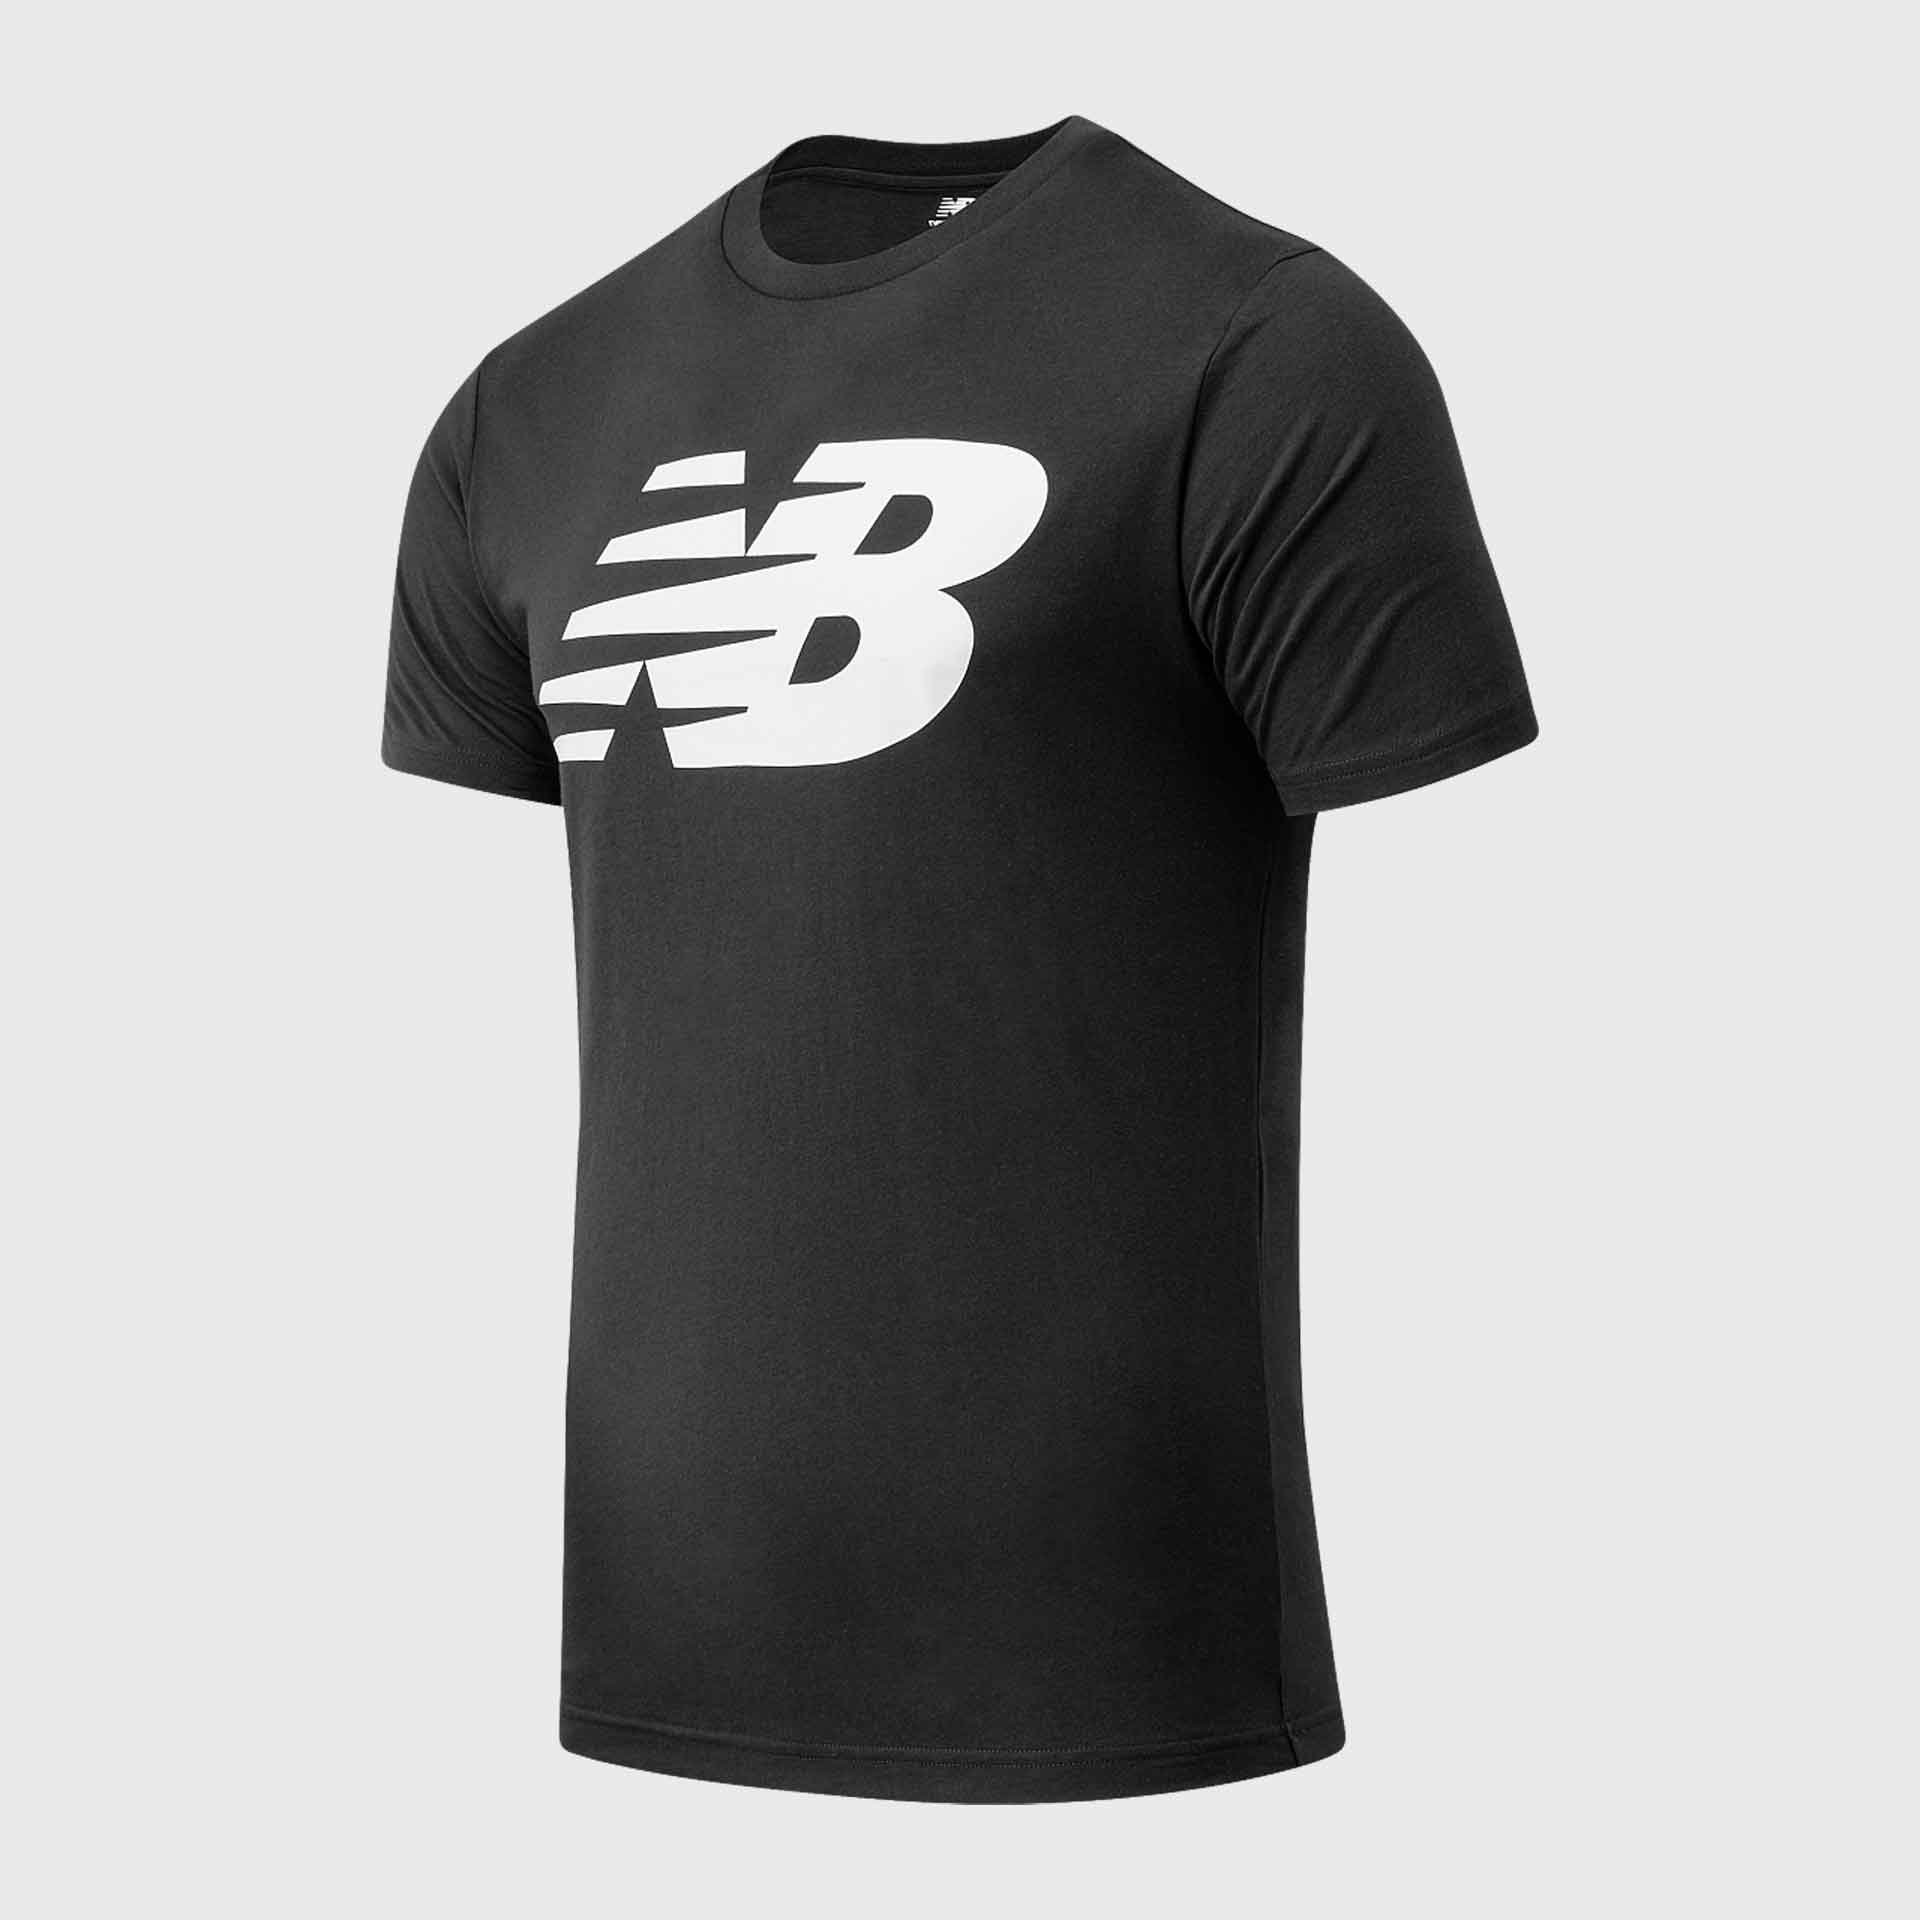 New Balance Classic NB T-Shirt Black